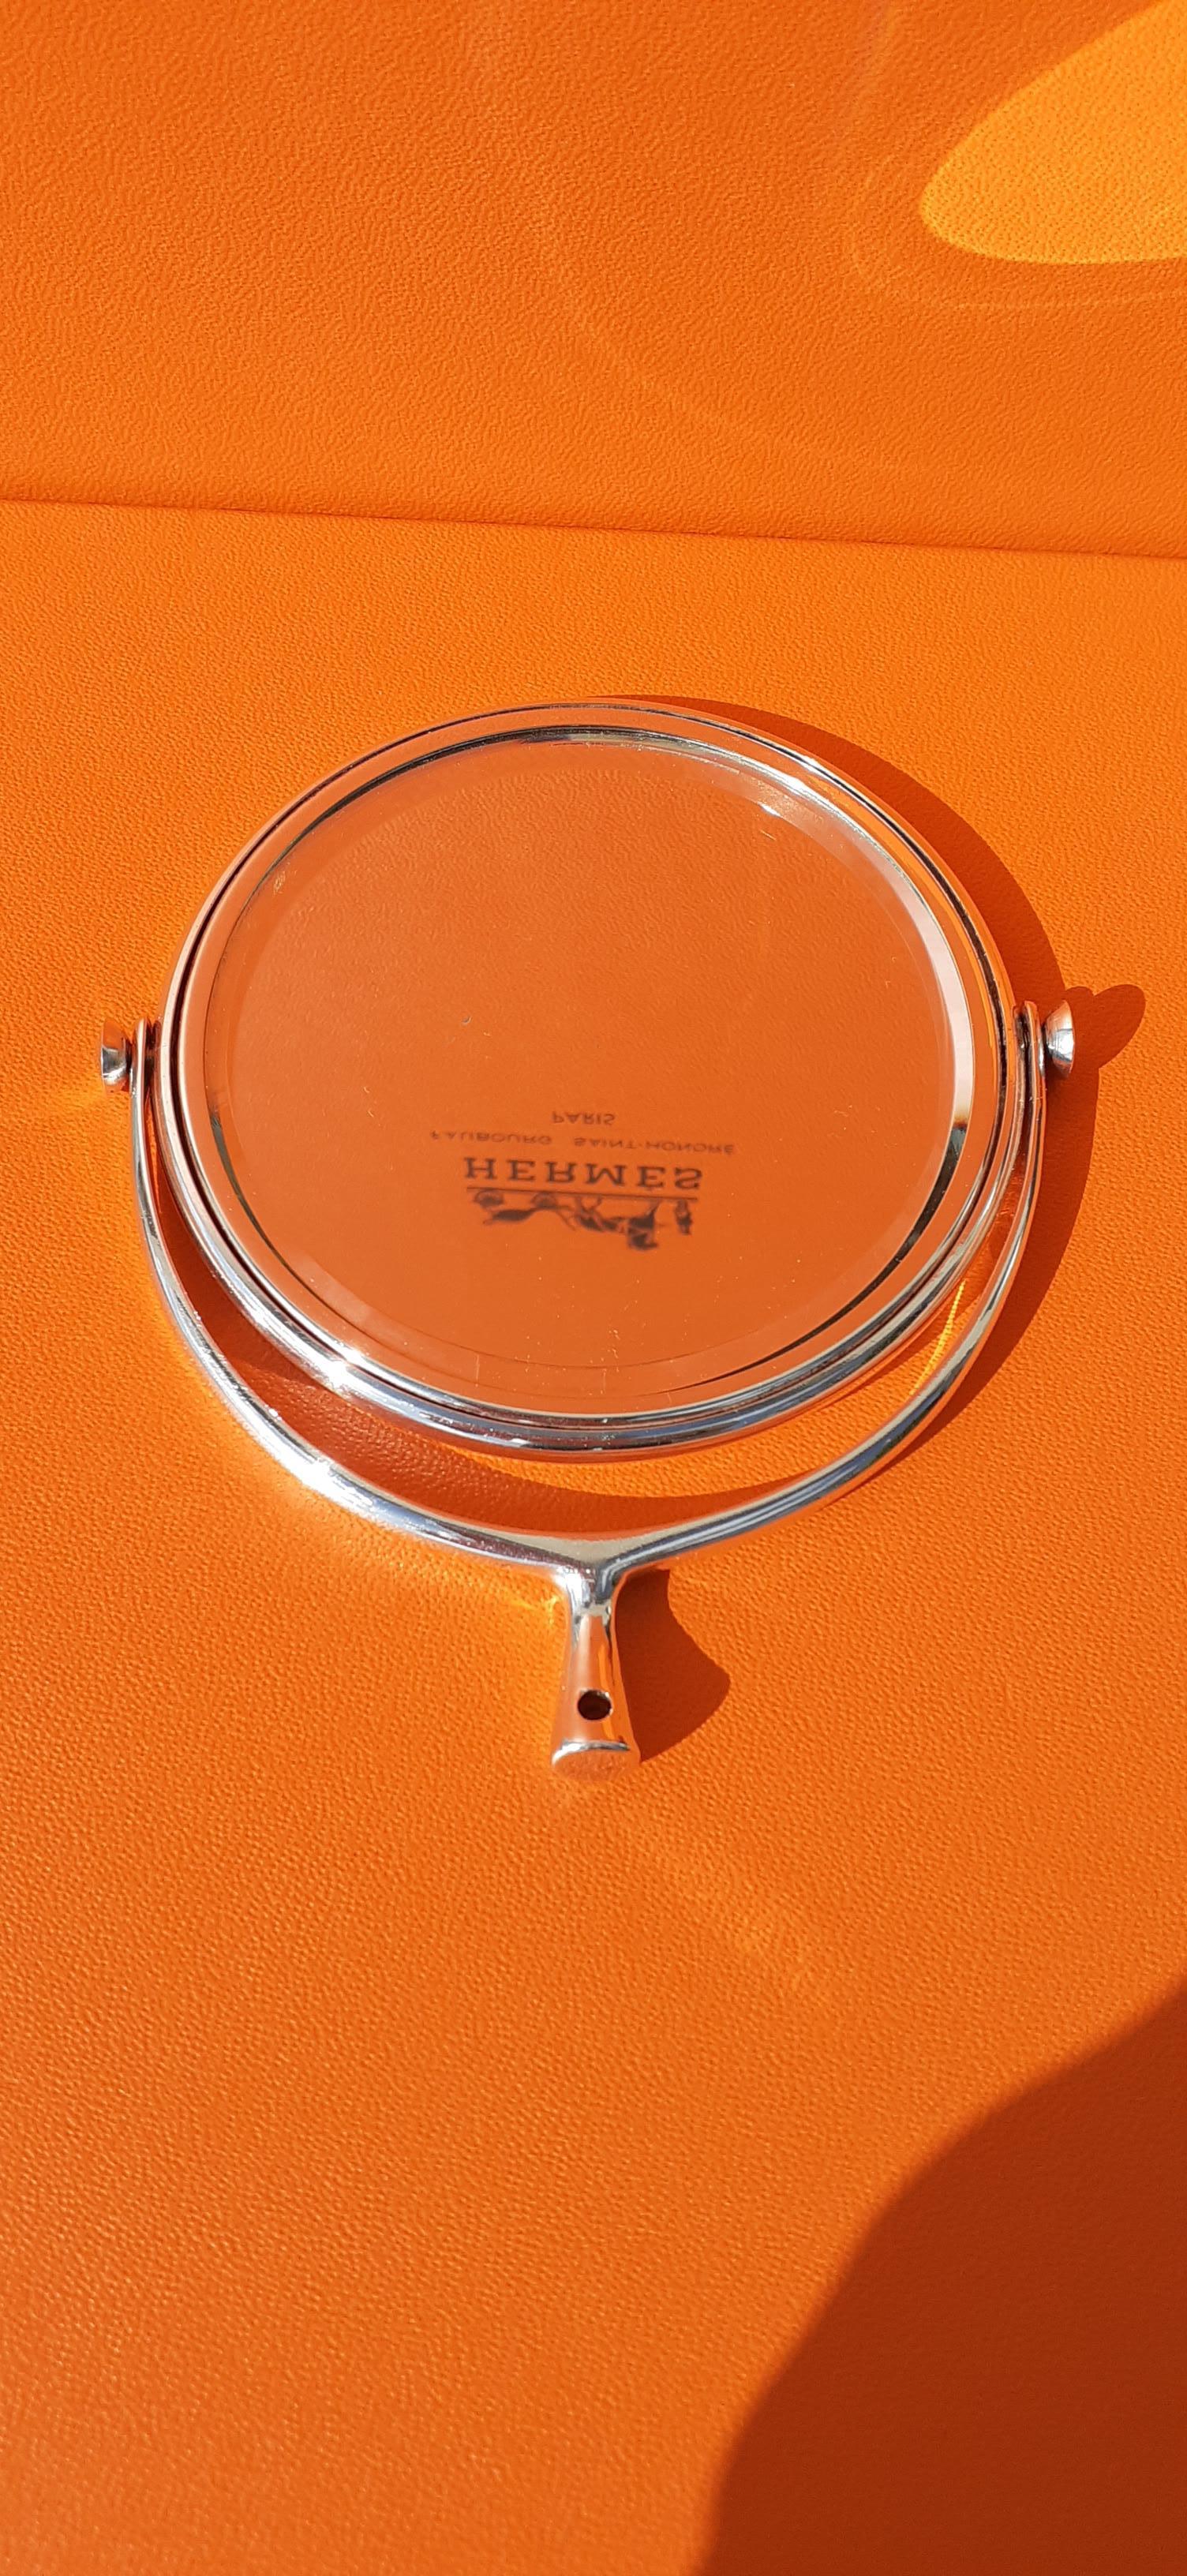 Cute Authentic Hermès Mirror

Small enough to slip into a handbag

In silvered meta, Vintage

